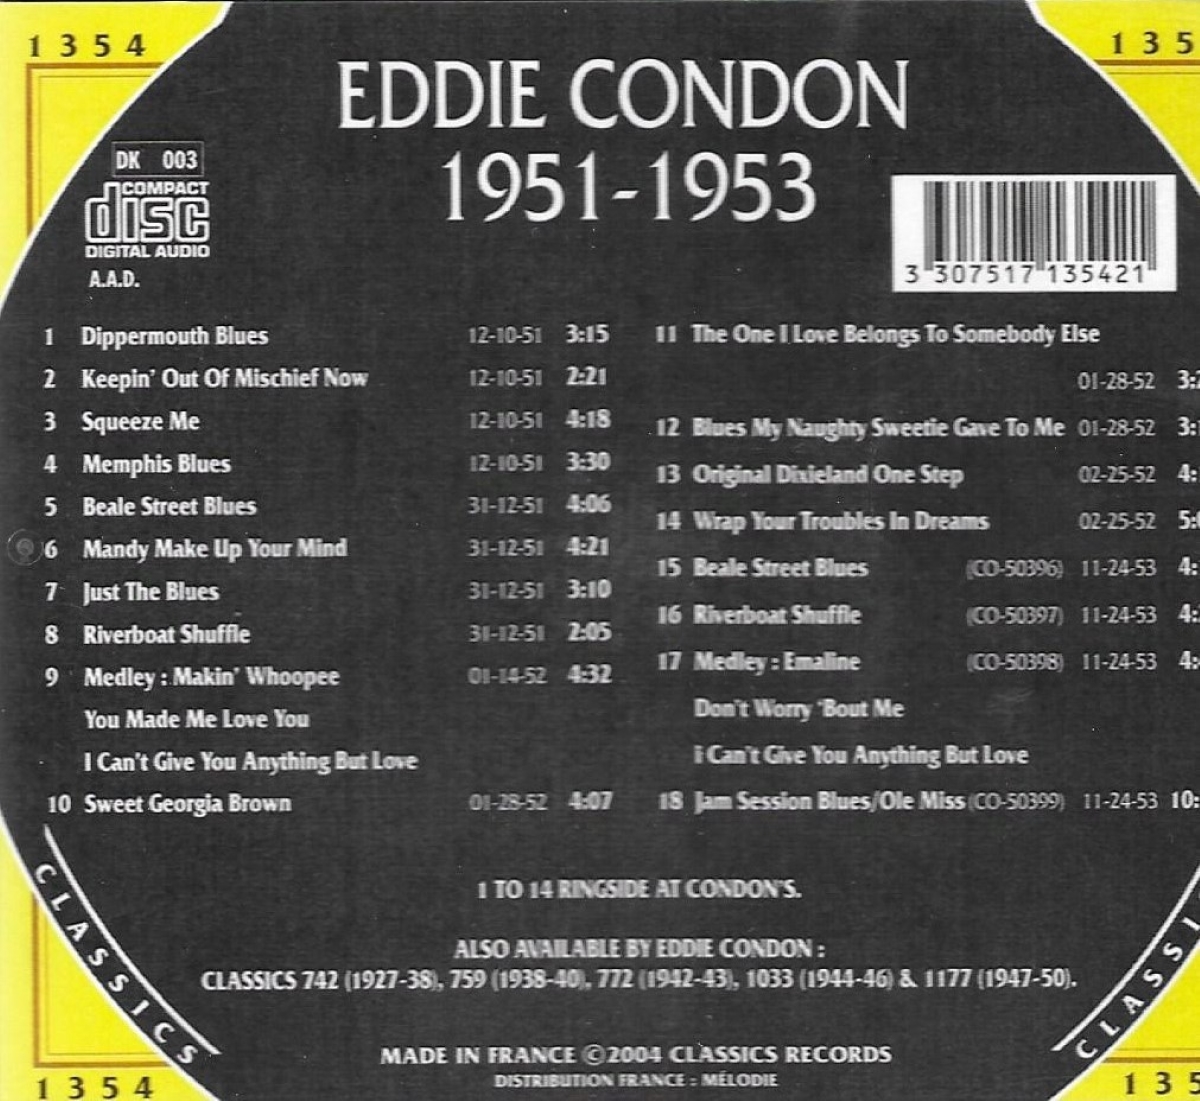 The Chronological Eddie Condon: 1951-1953